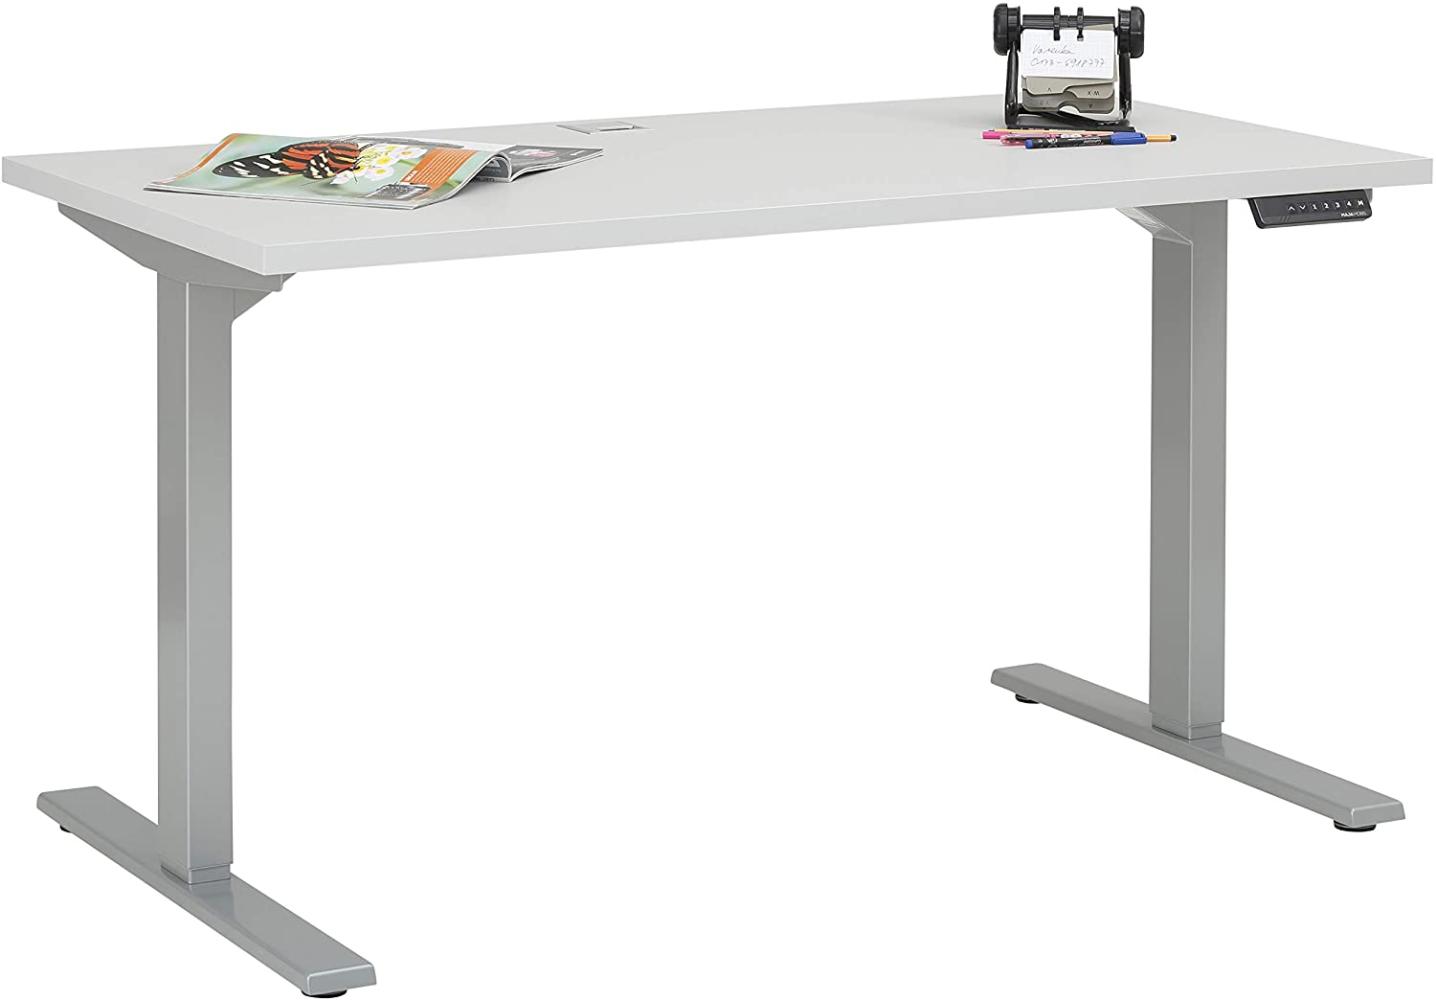 MAJA Möbel eDJUST Schreibtisch, Holzwerkstoff, melaminharzbeschichtet, Metall platingrau-platingrau, ca. 135x120x68 cm Bild 1